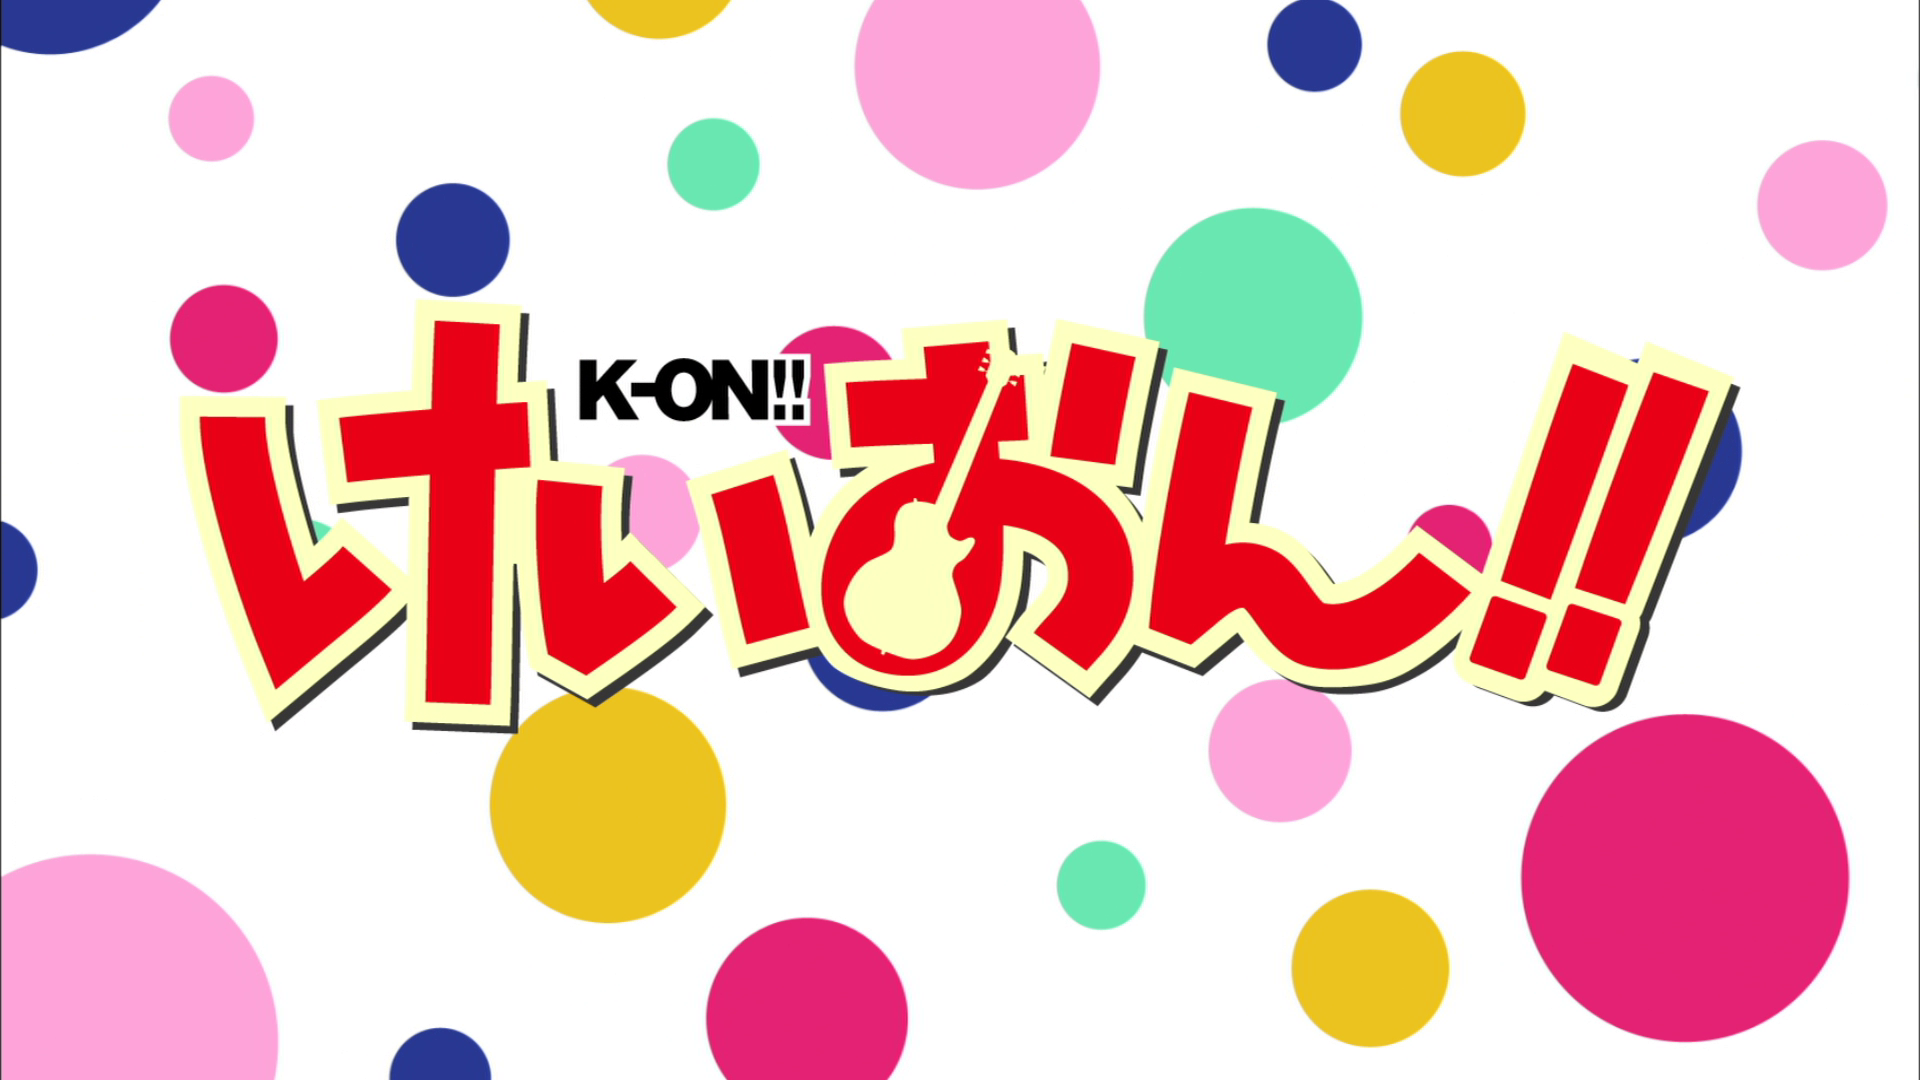 K-on: Season 2 Collection 2/ [DVD] [Import] tf8su2k